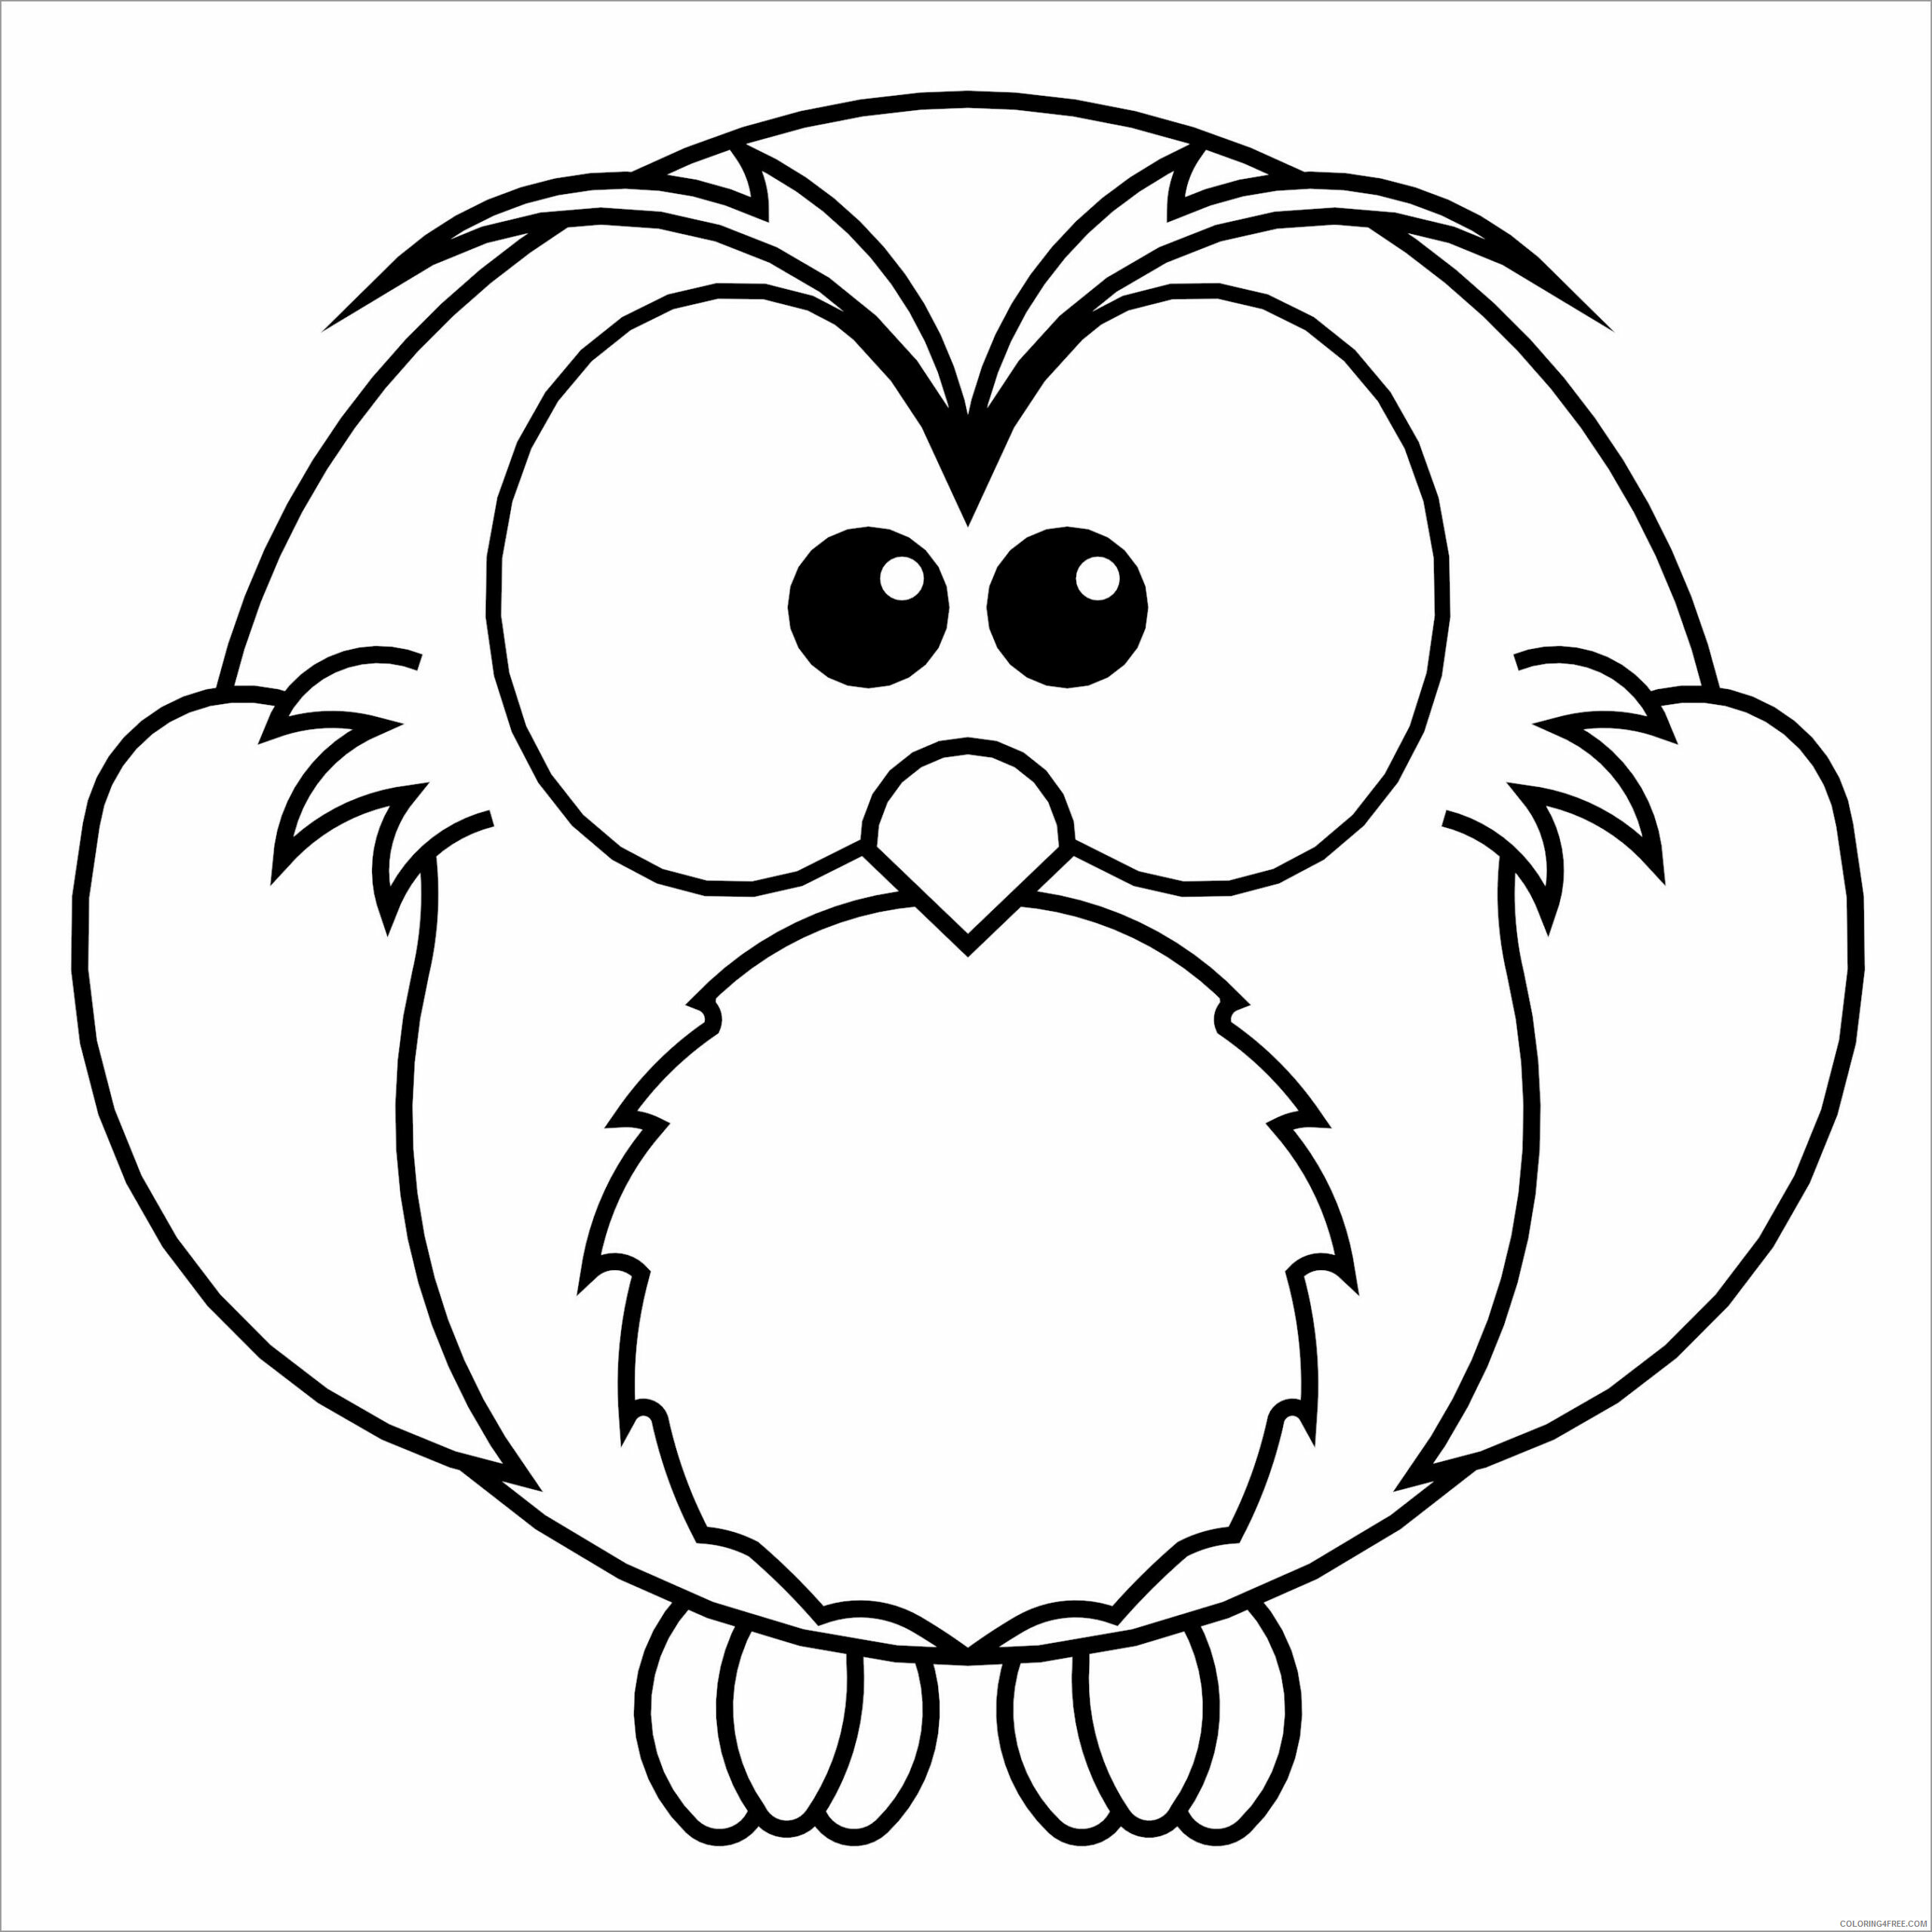 Preschool Animal Coloring Pages easy owl for preschool Printable 2021 4850 Coloring4free